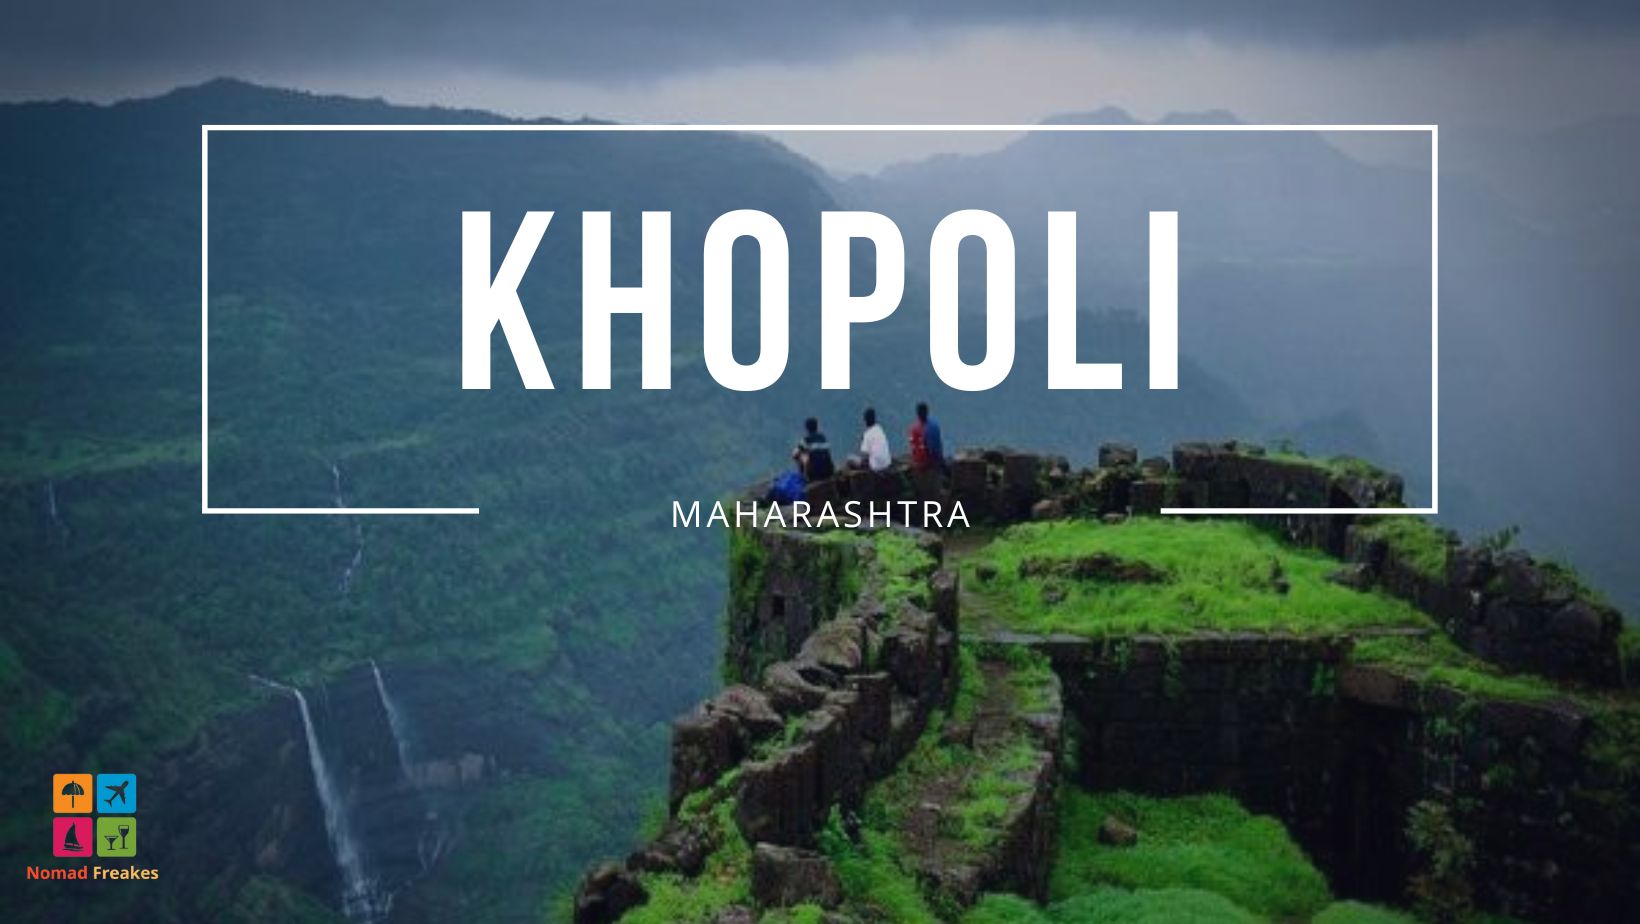 The Top 5 Places to Visit in Khopoli, Maharashtra